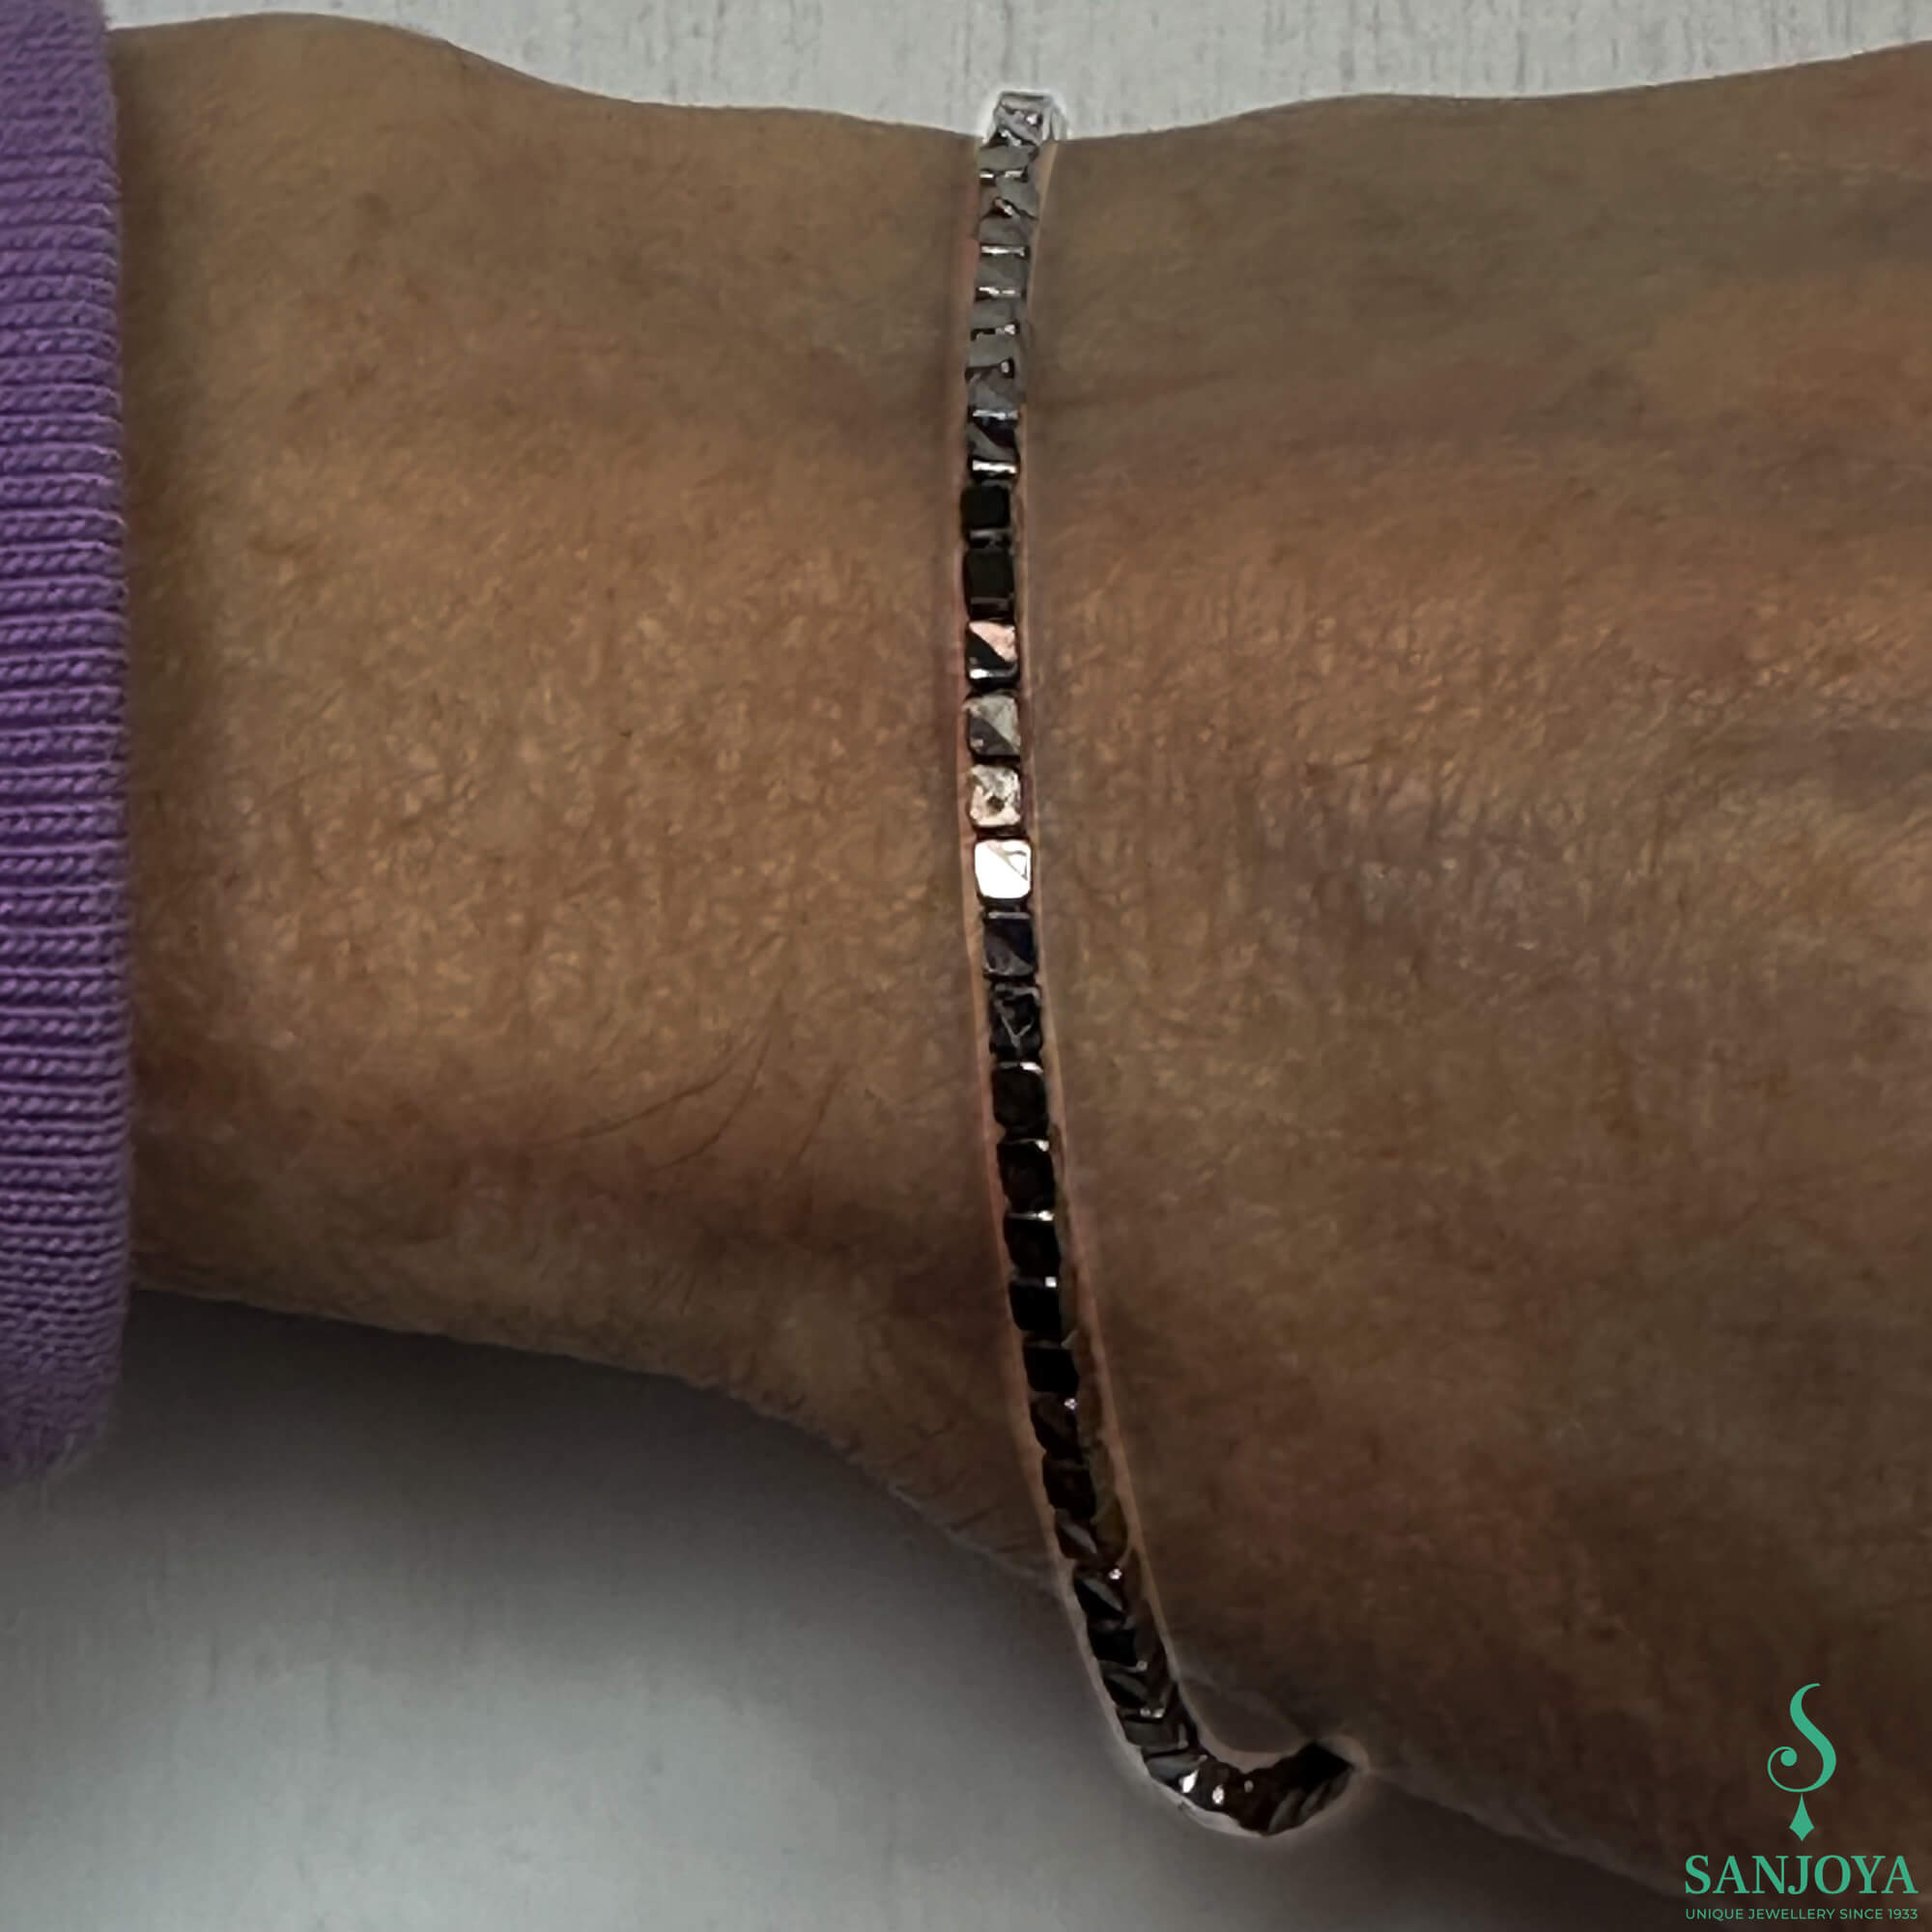 Refined block bracelet made of hematite